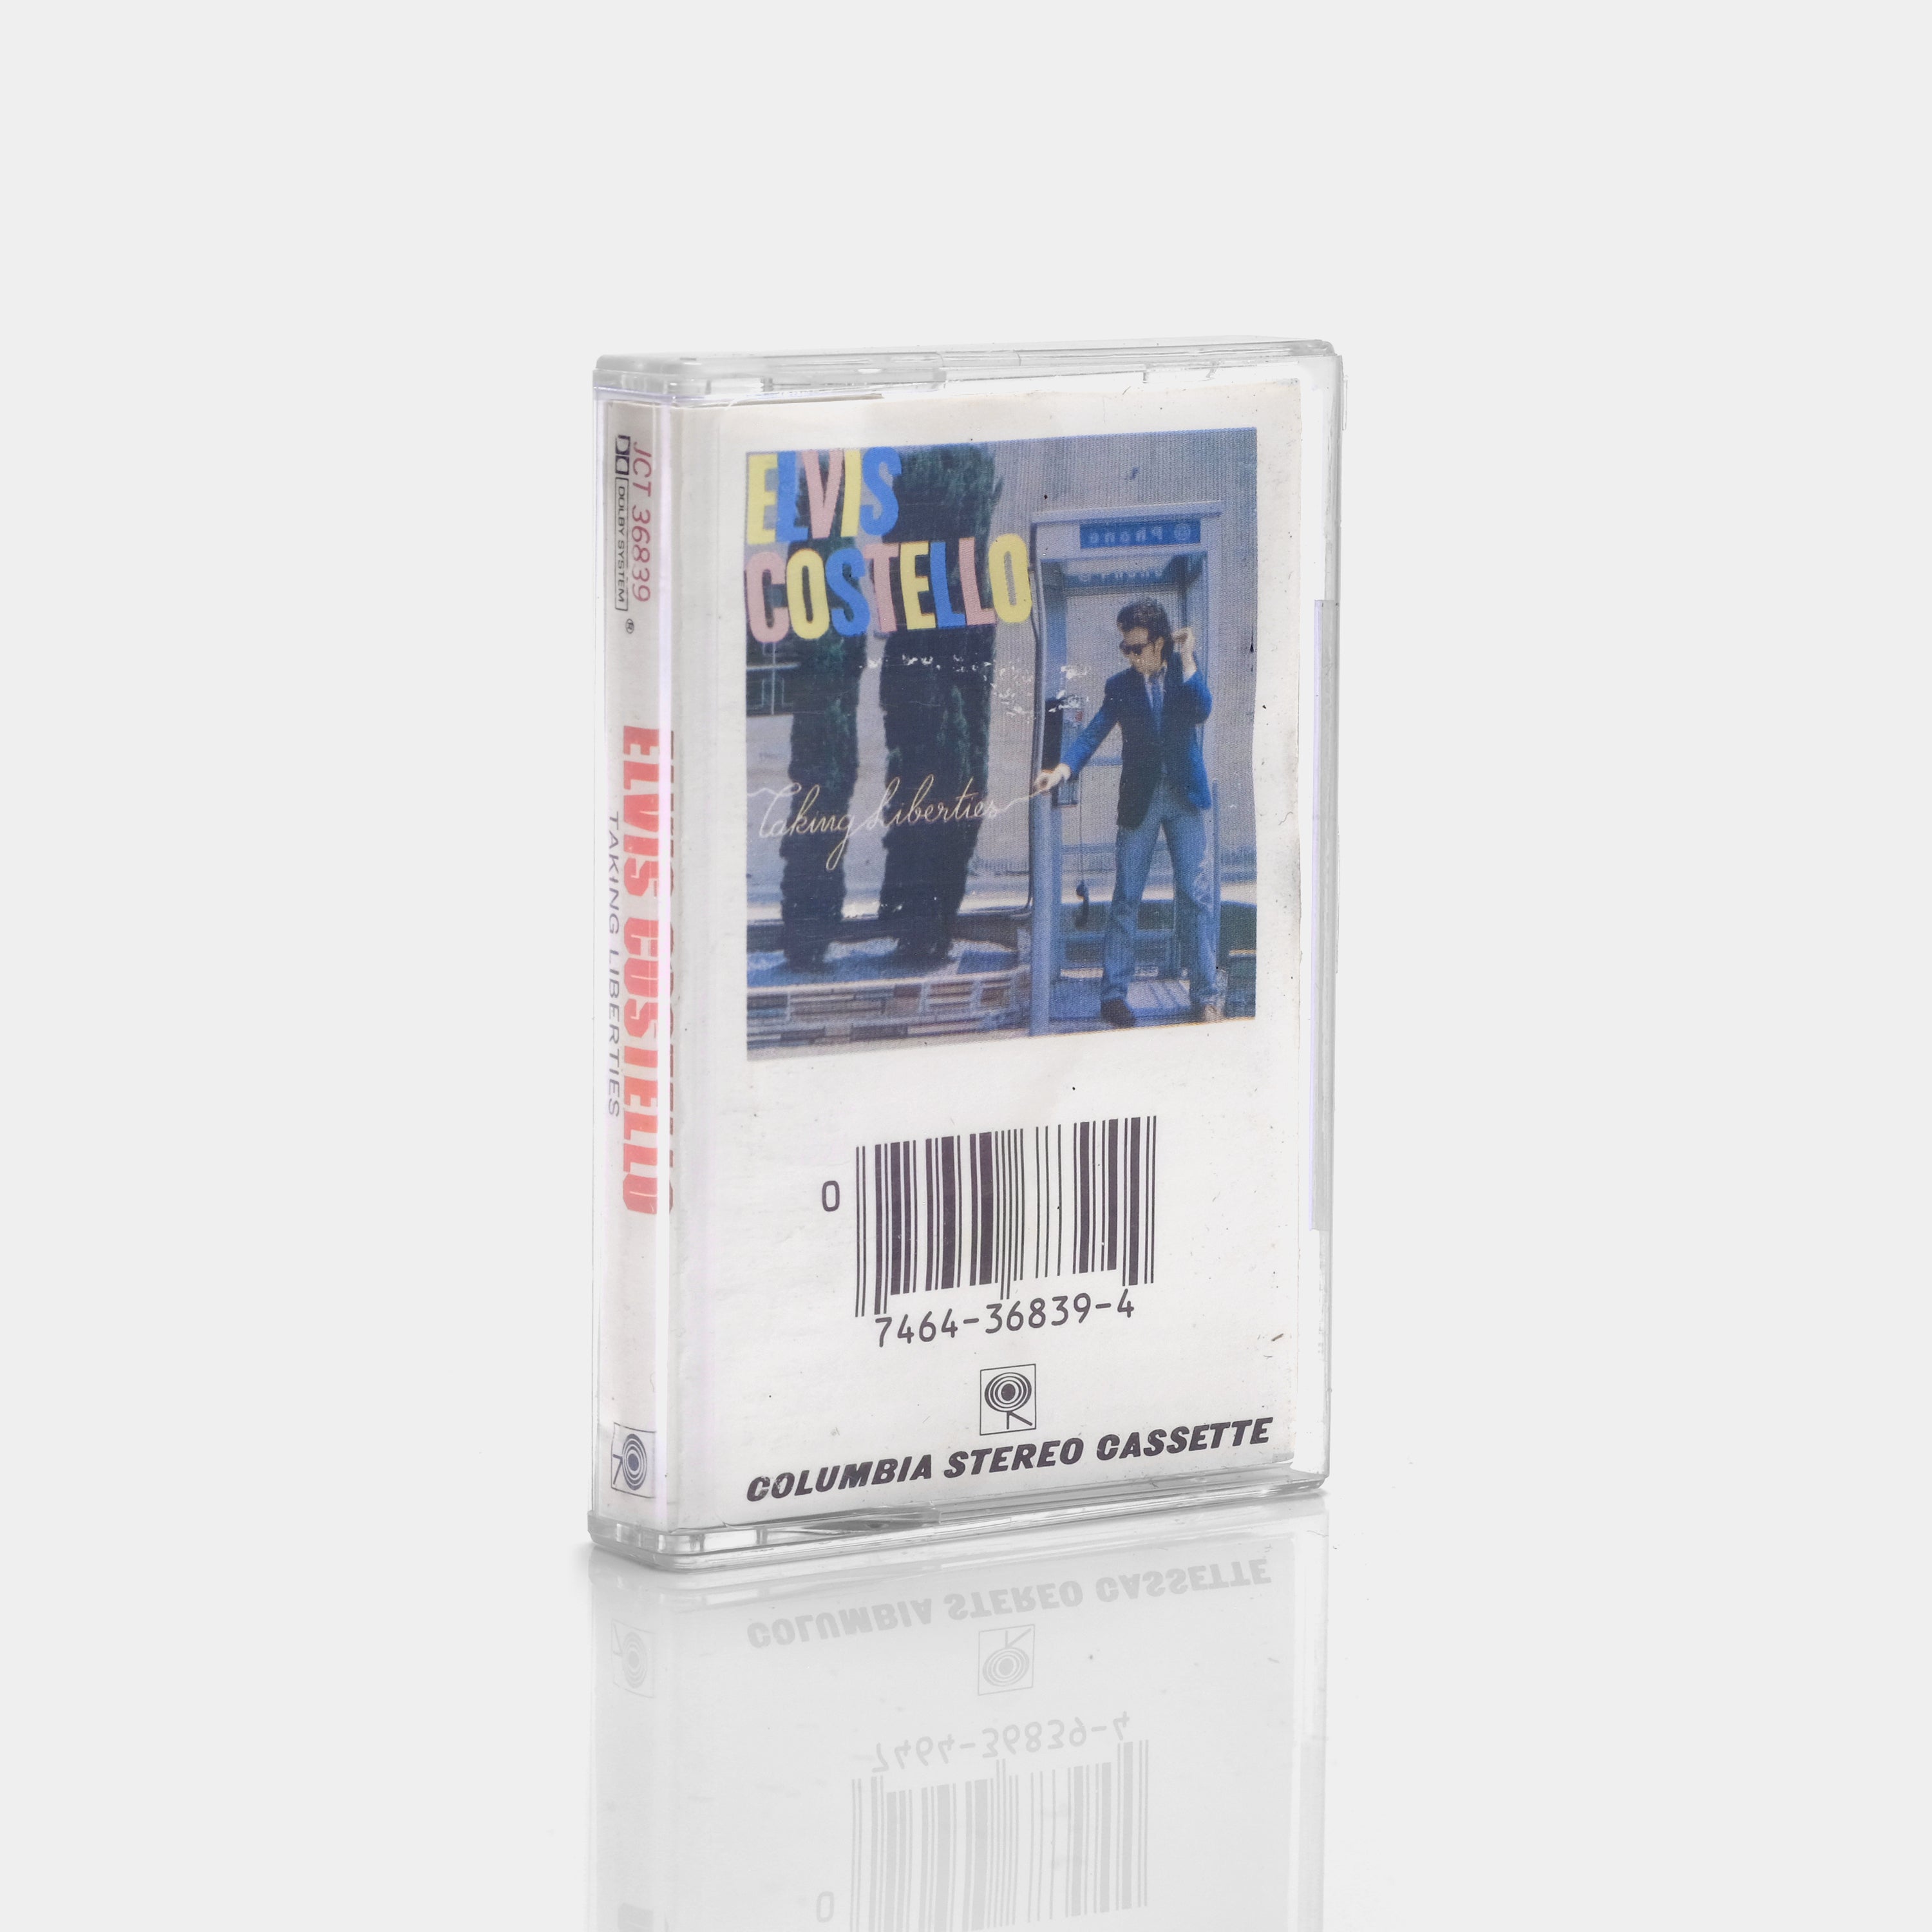 Elvis Costello - Taking Liberties Cassette Tape